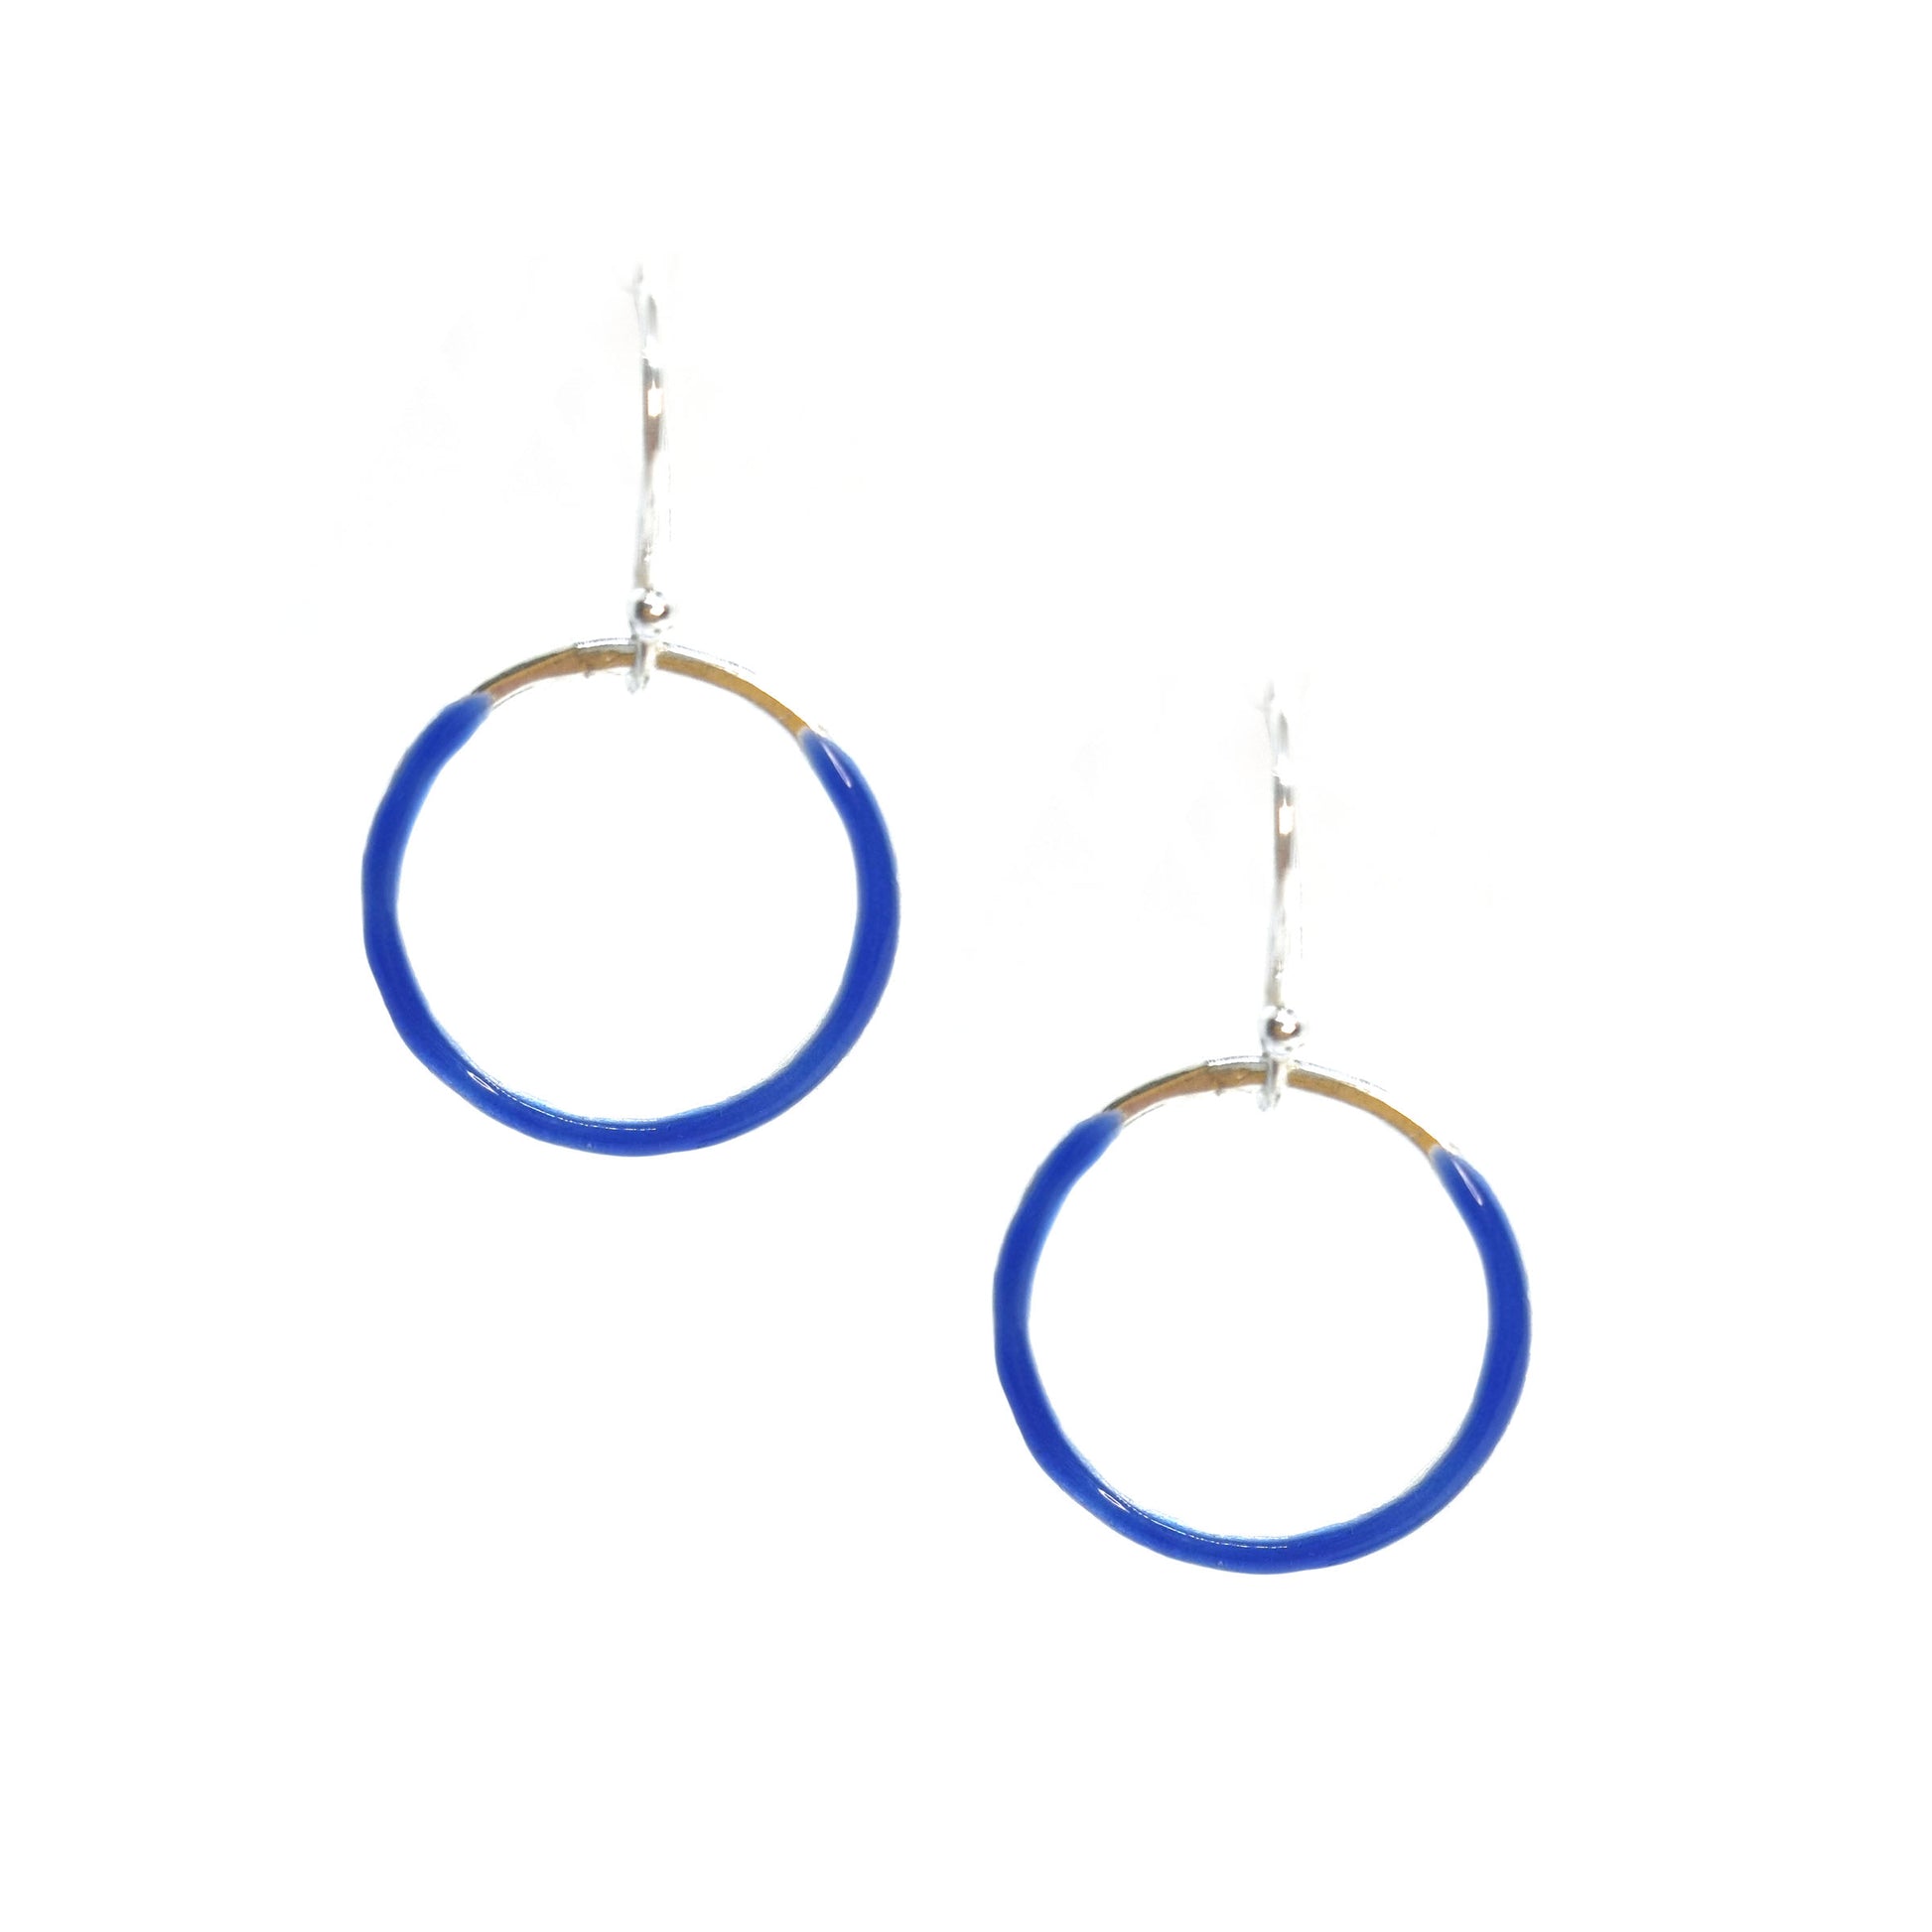 Silver open circle drop earrings with royal blue enamel.